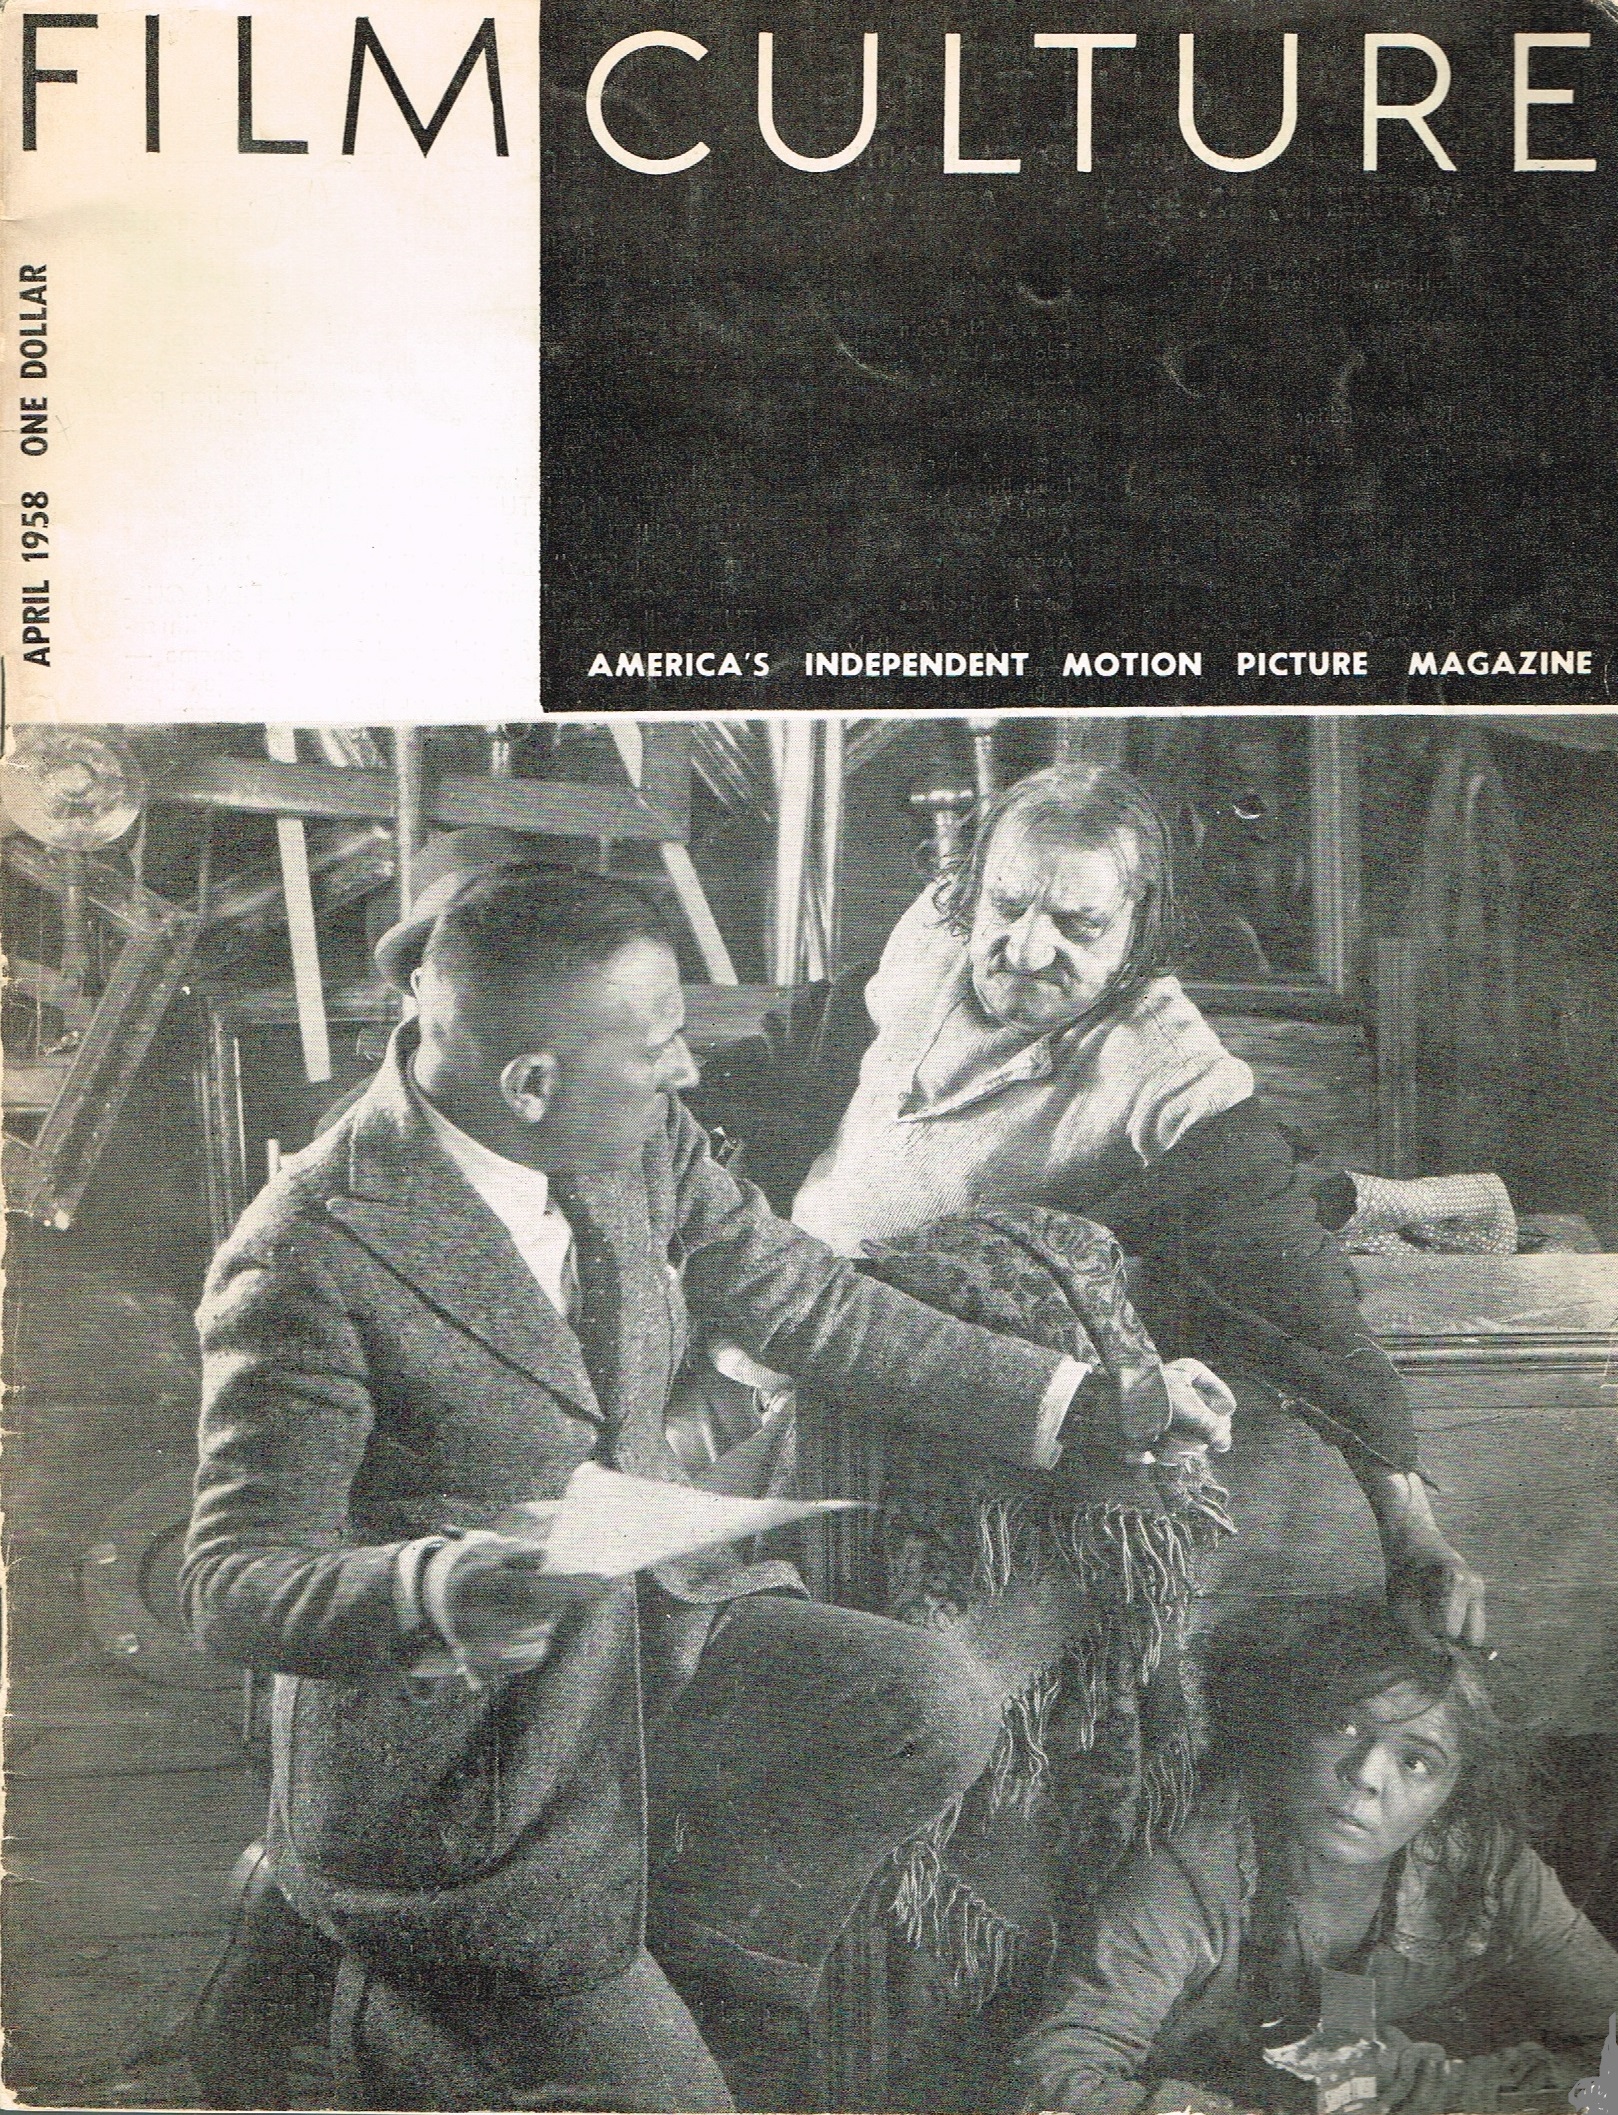 (FILM CULTURE). Mekas, Jonas, Edouard de Laurot, George N. Fenin & Adolfas Mekas, Editors - FILM CULTURE VOLUME 4, NUMBER 3 (ISSUE 18) APRIL 1958